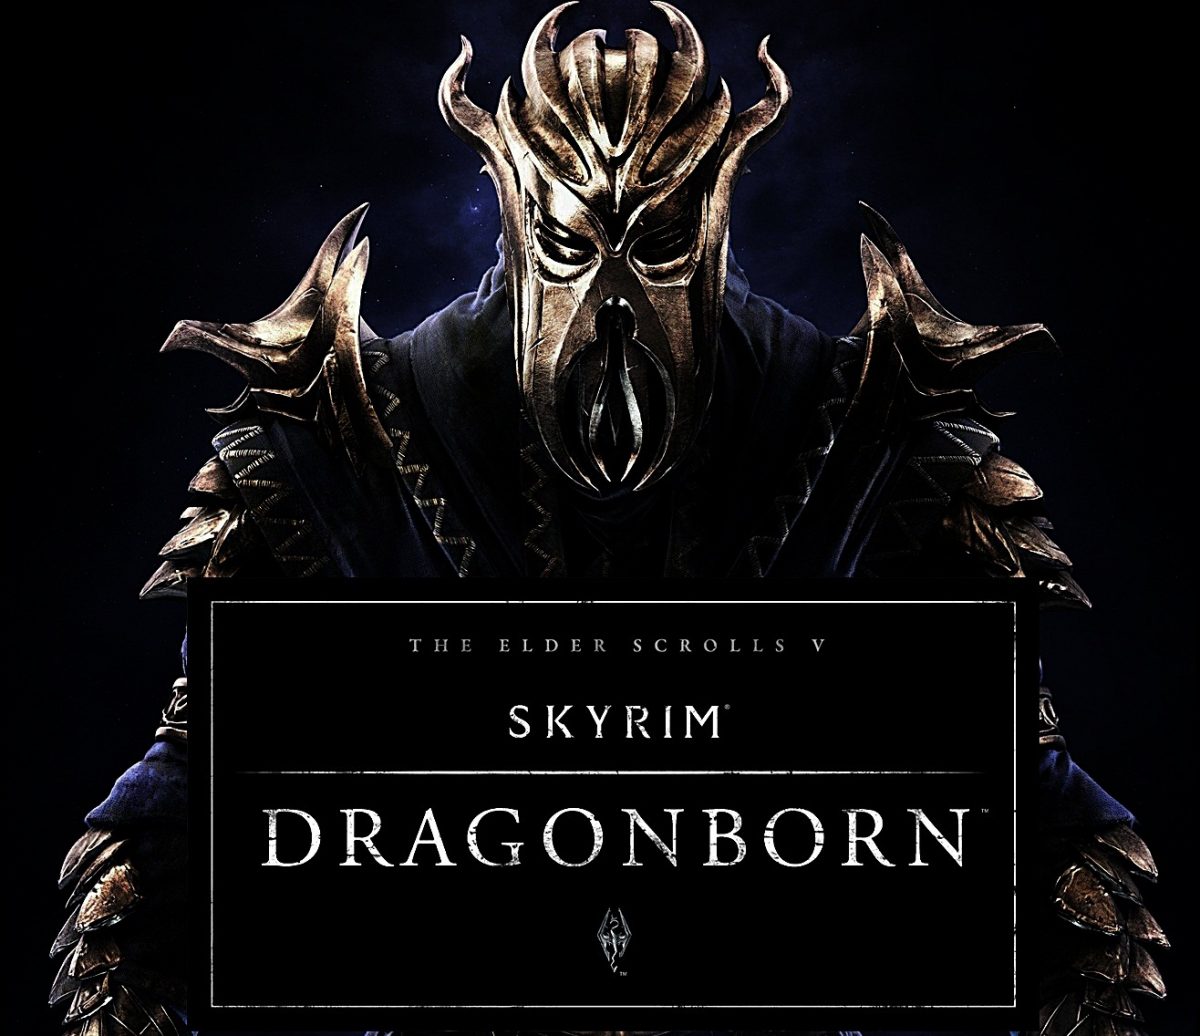 skyrim dragonborn dlc download free pc